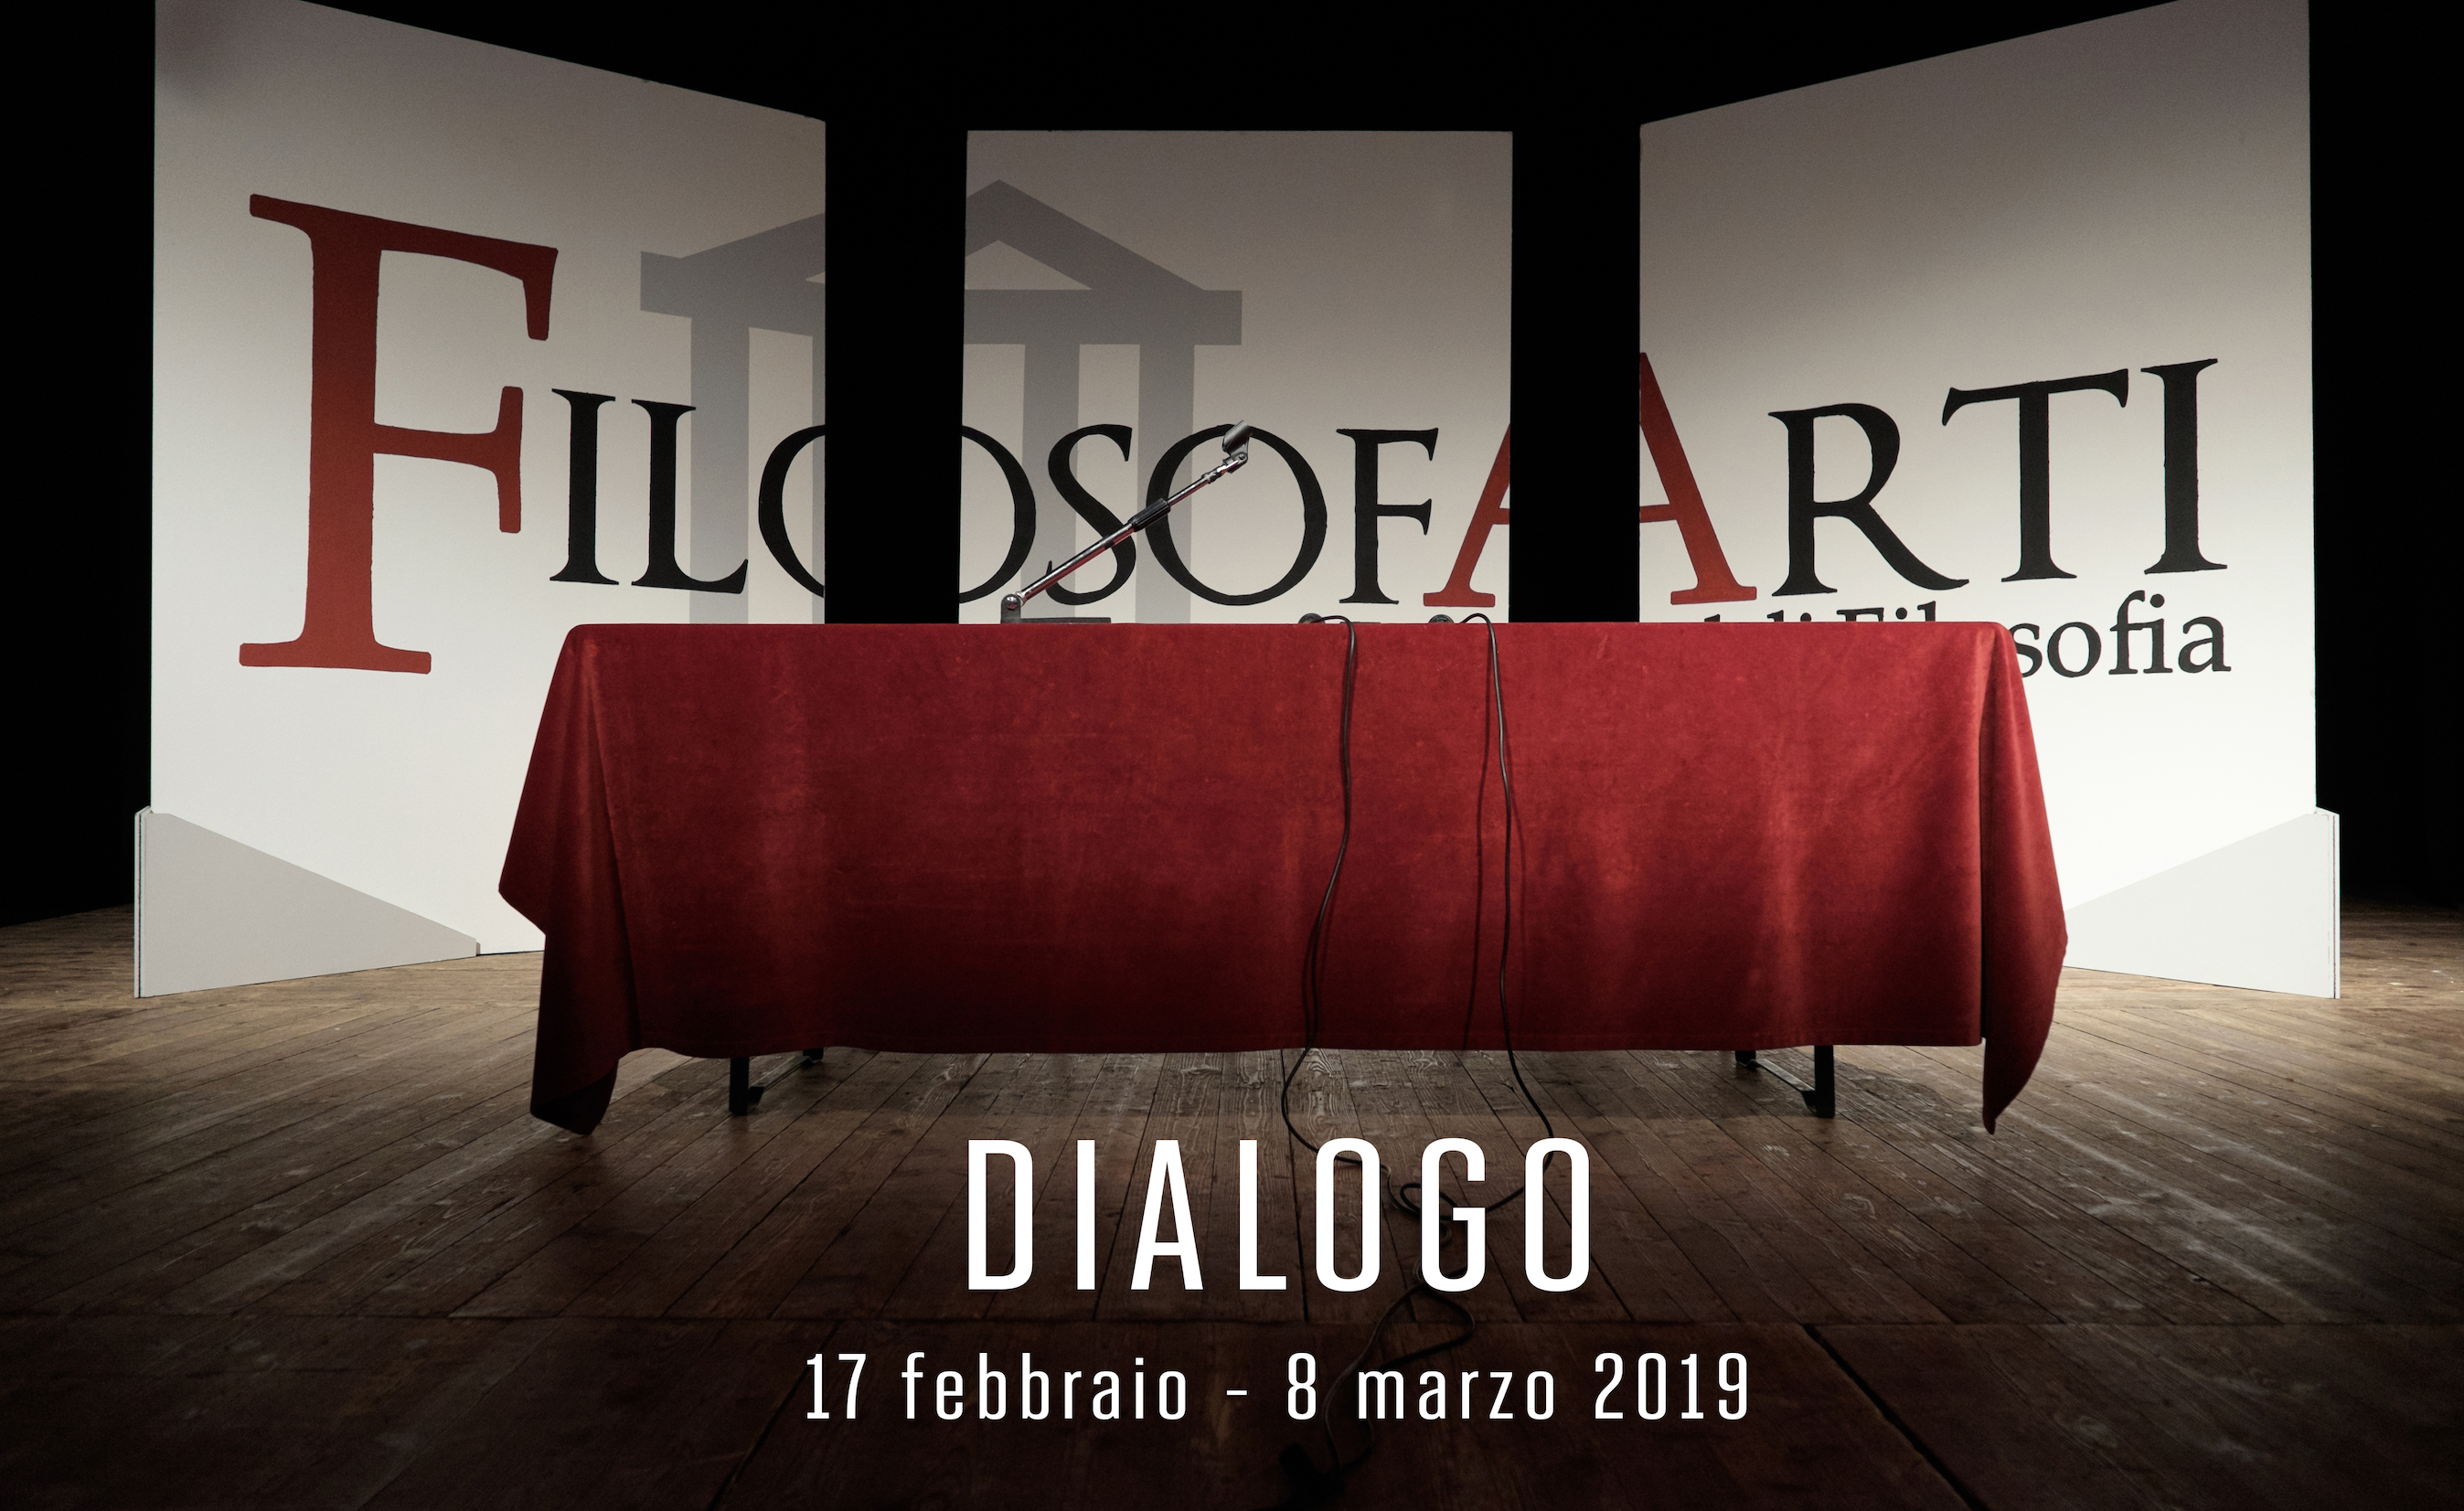 Filosofarti 2019 / Dialogo